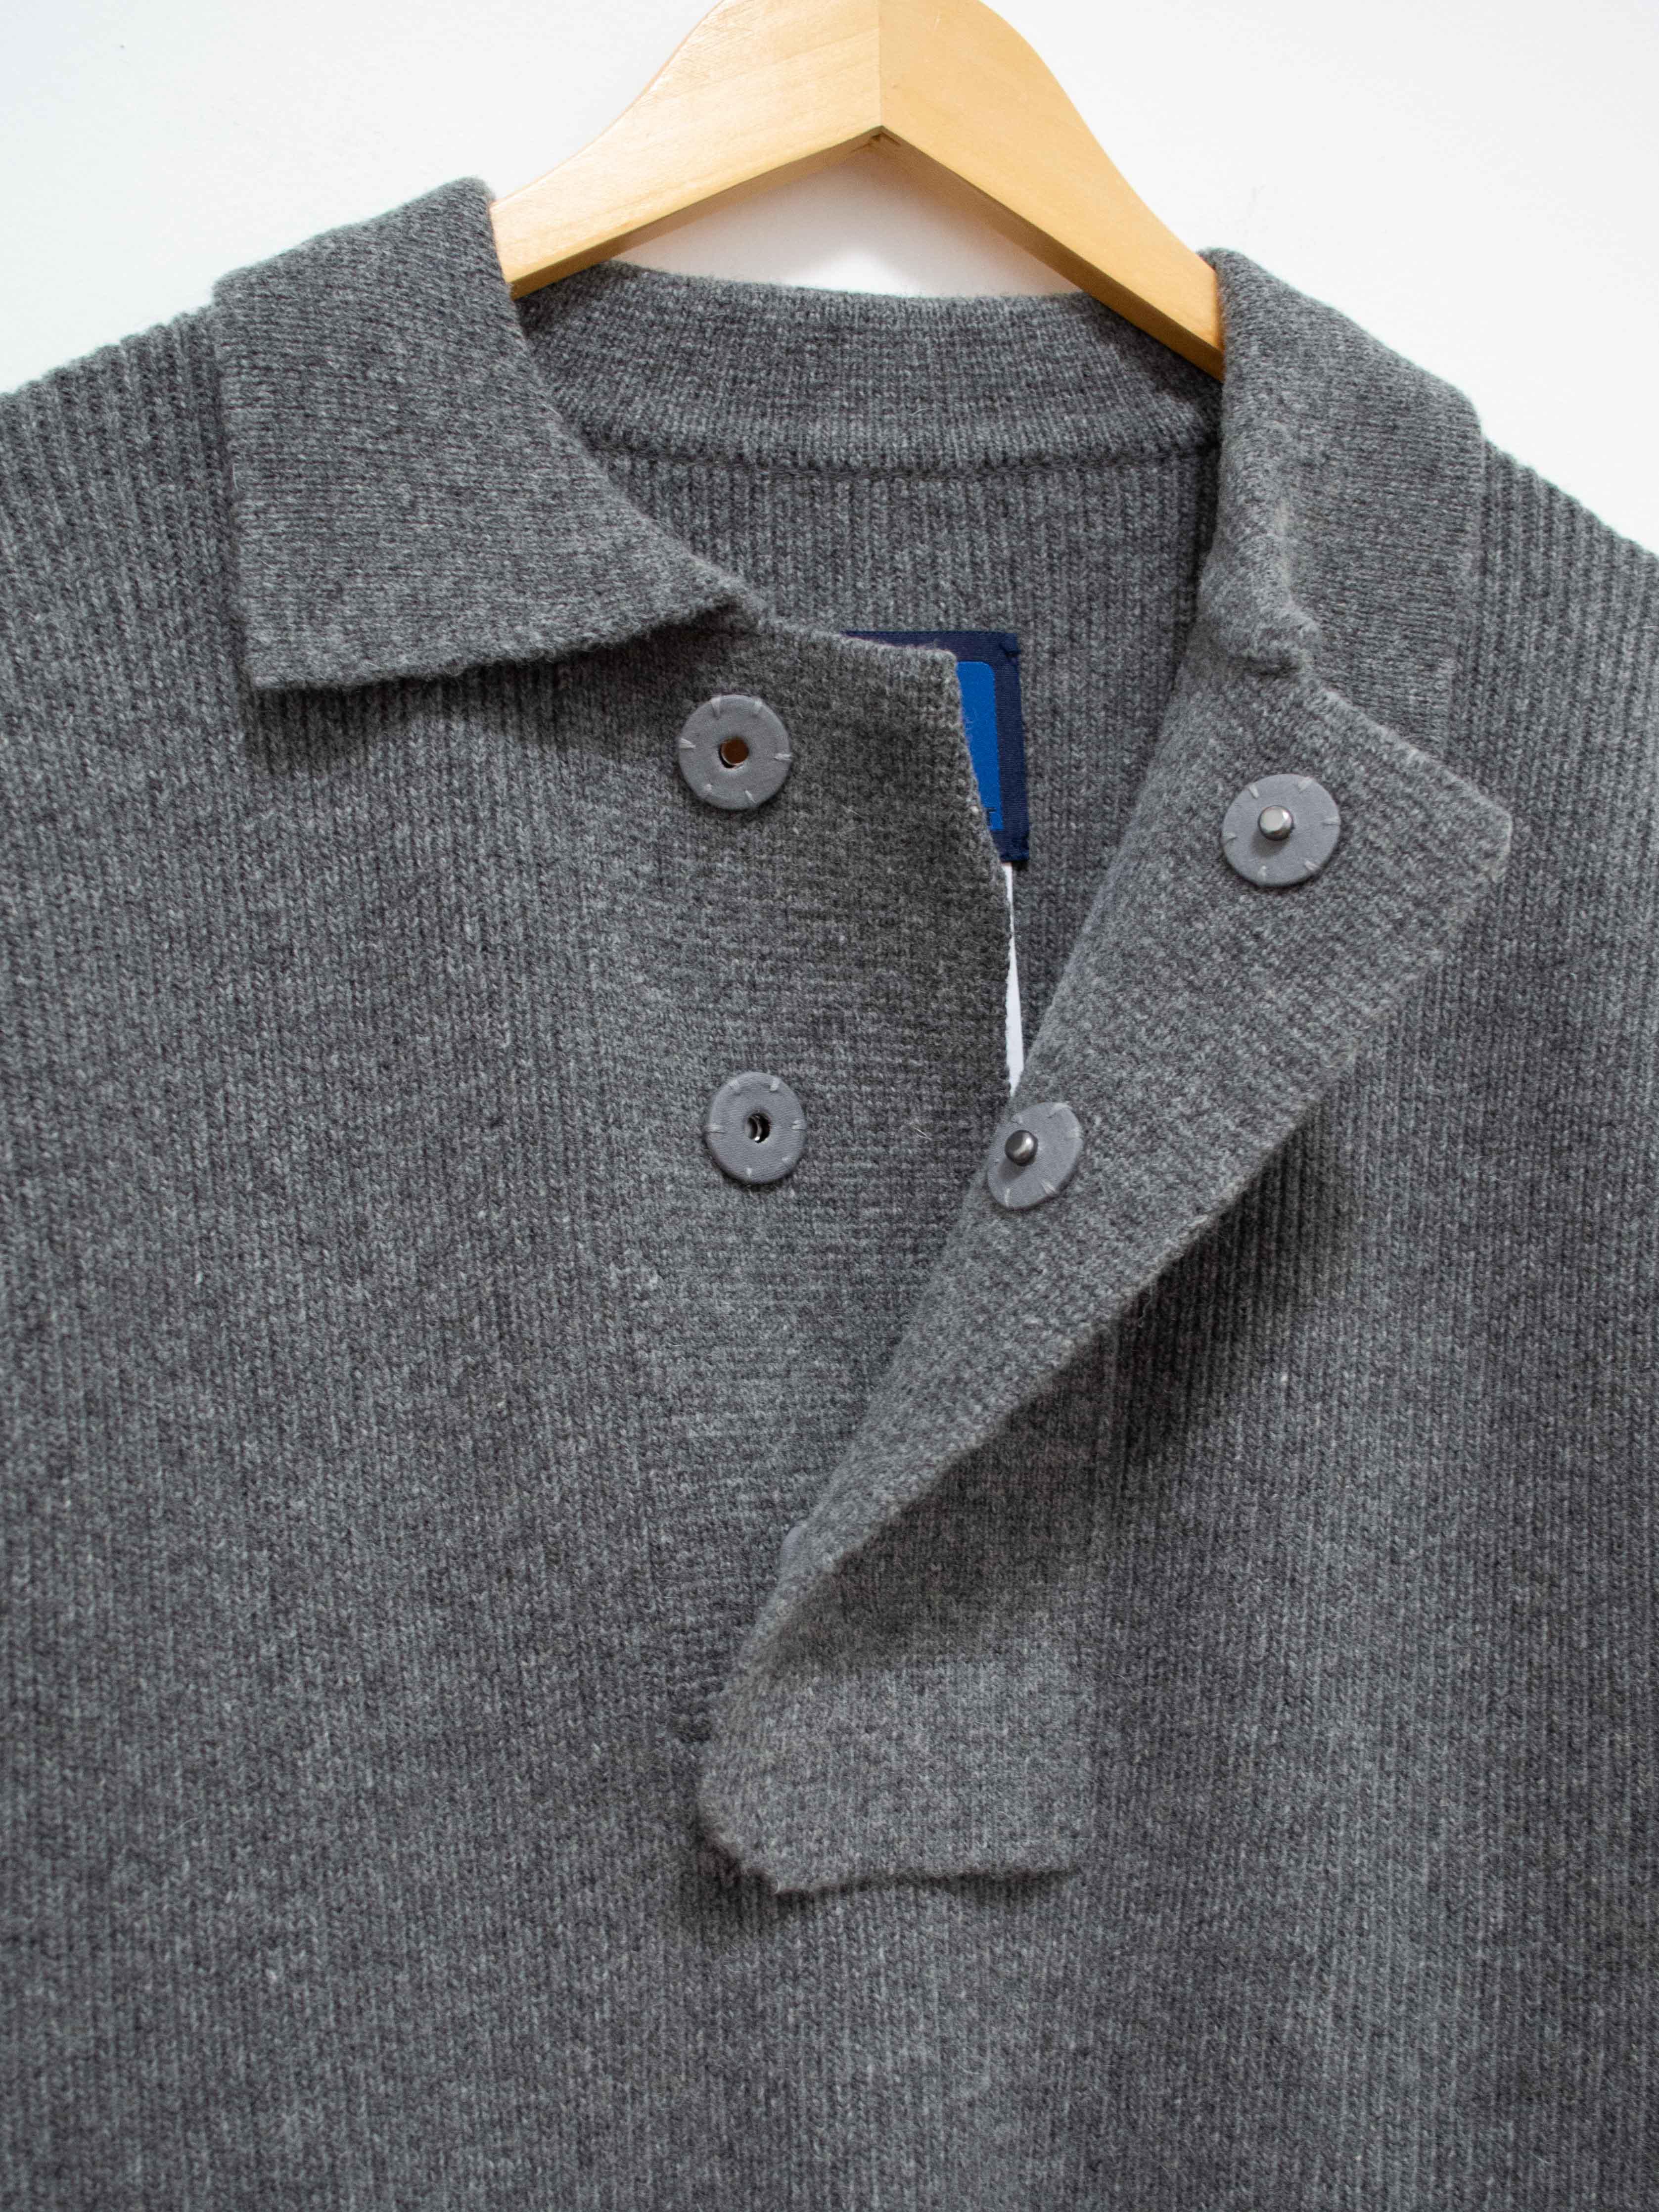 Namu Shop - Document Shirting Jacket Sweater - Gray